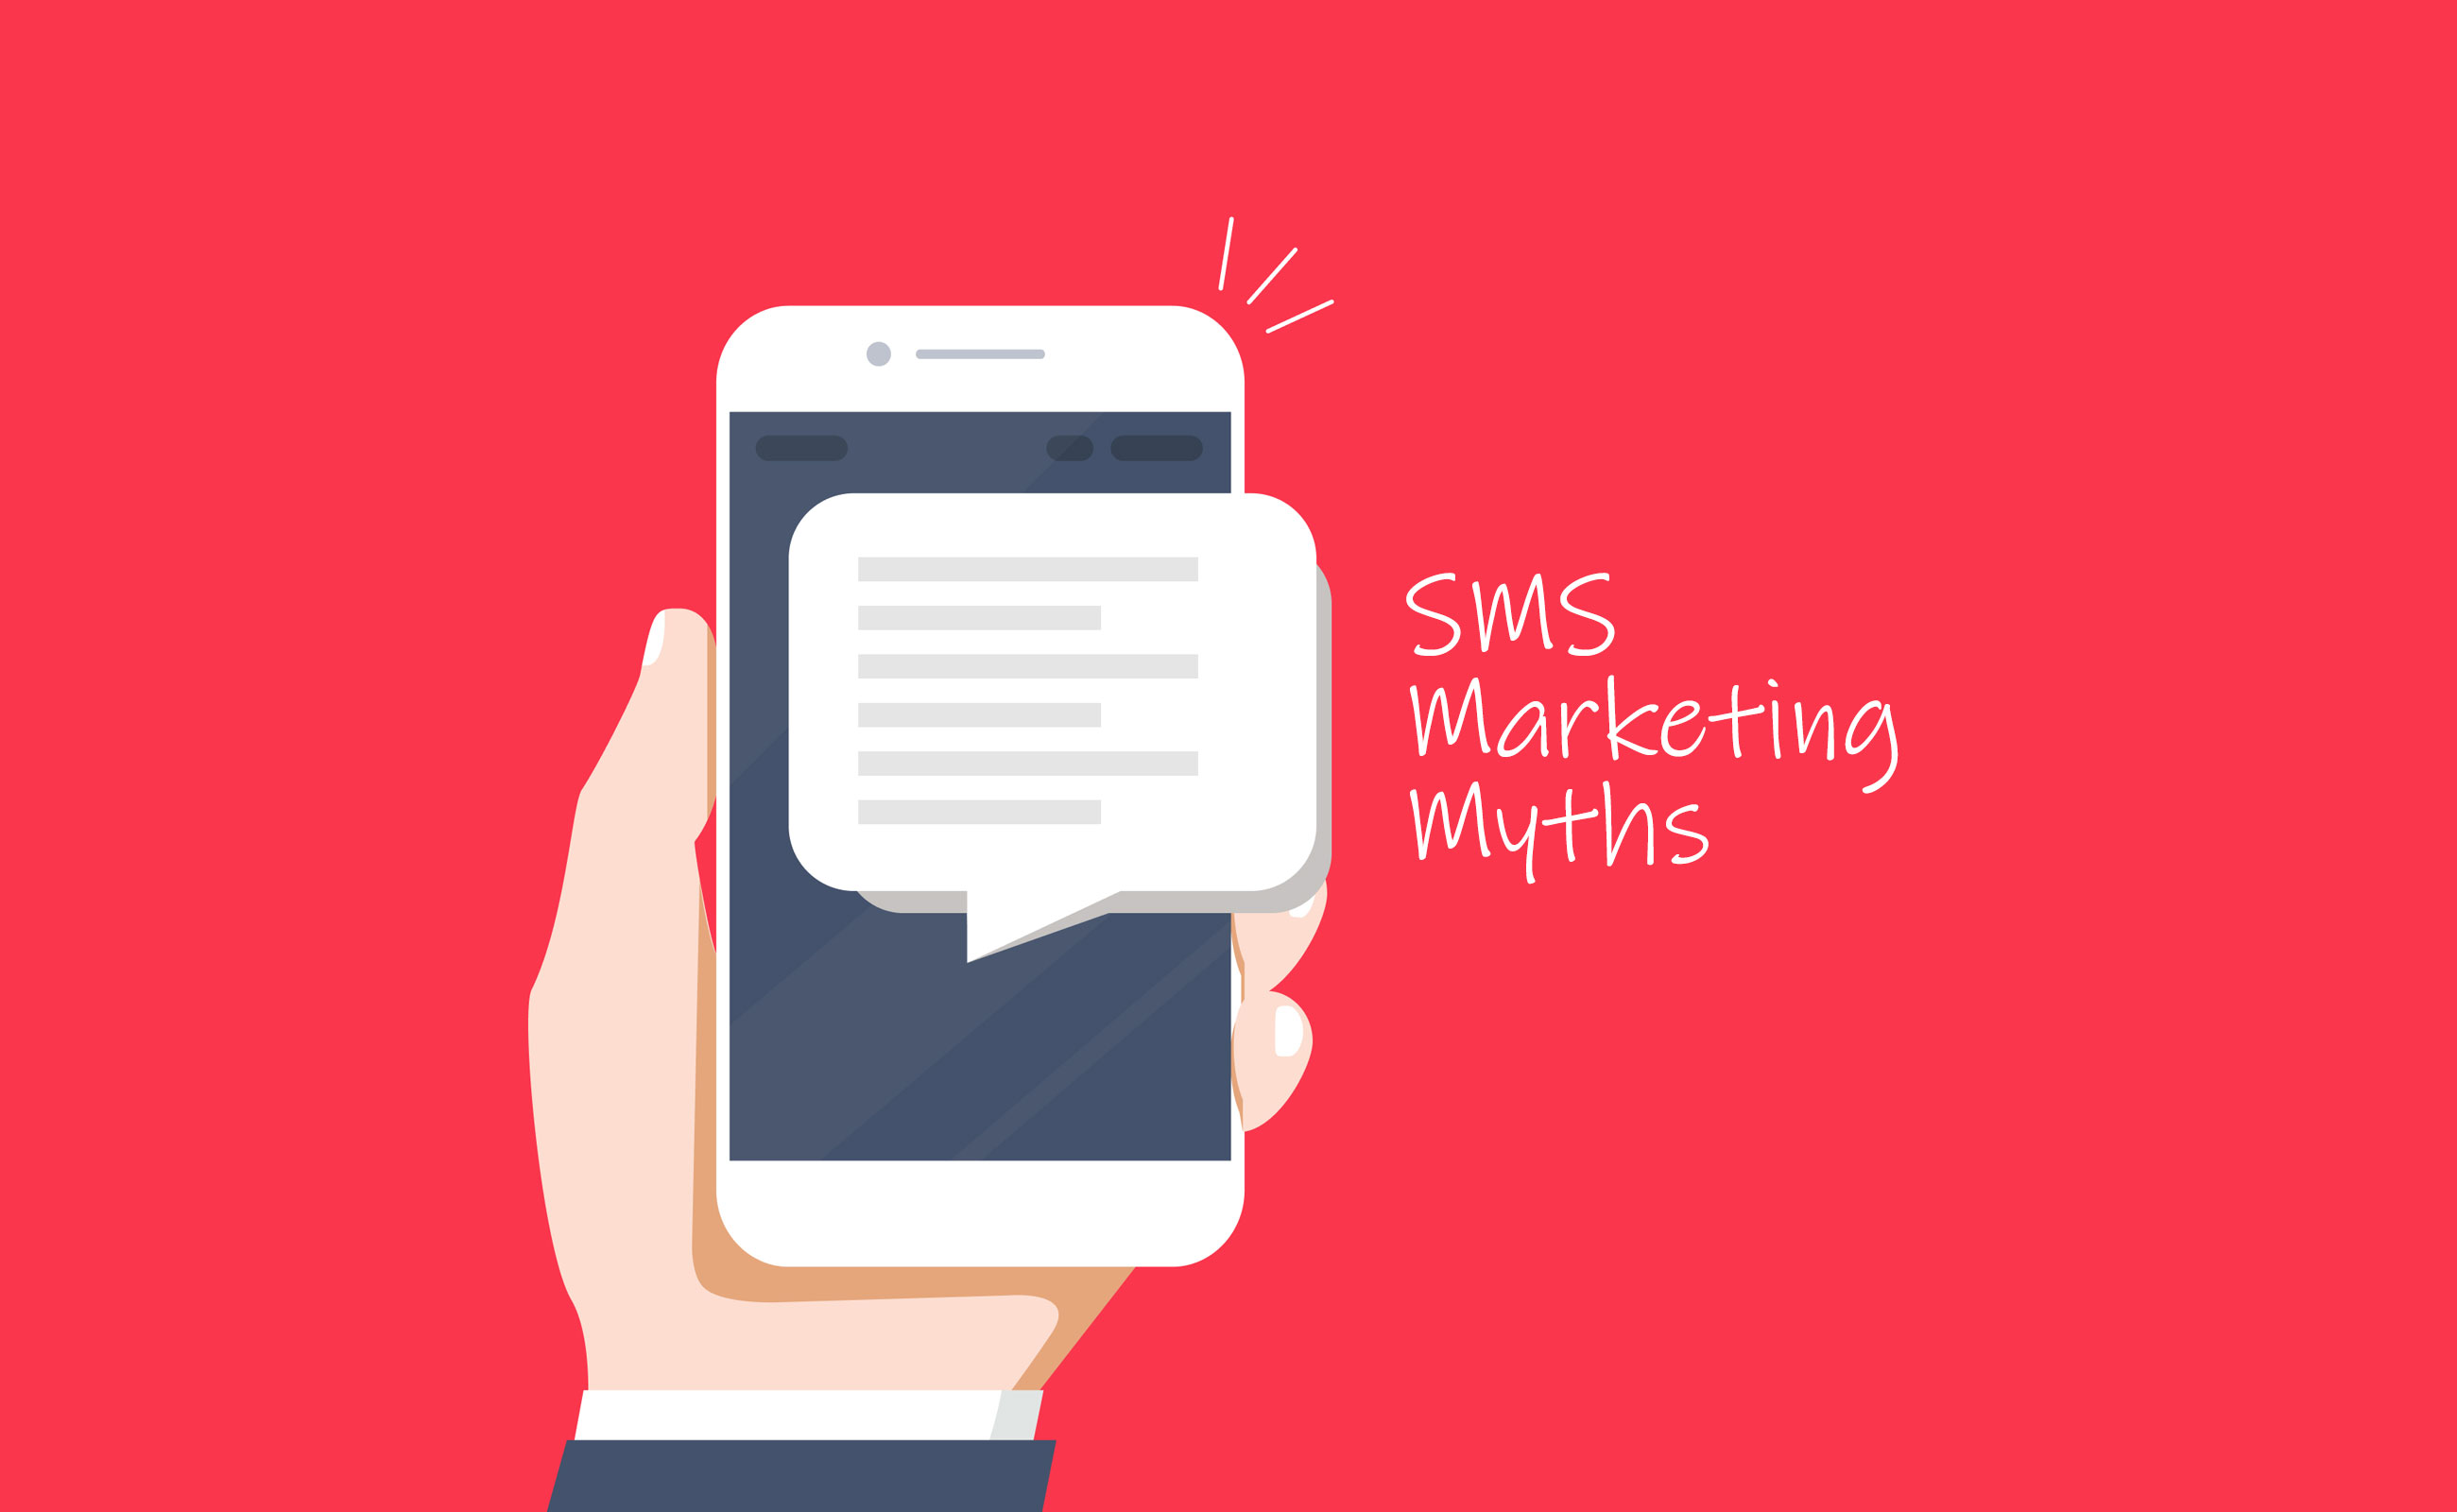 SMS Marketing Myths